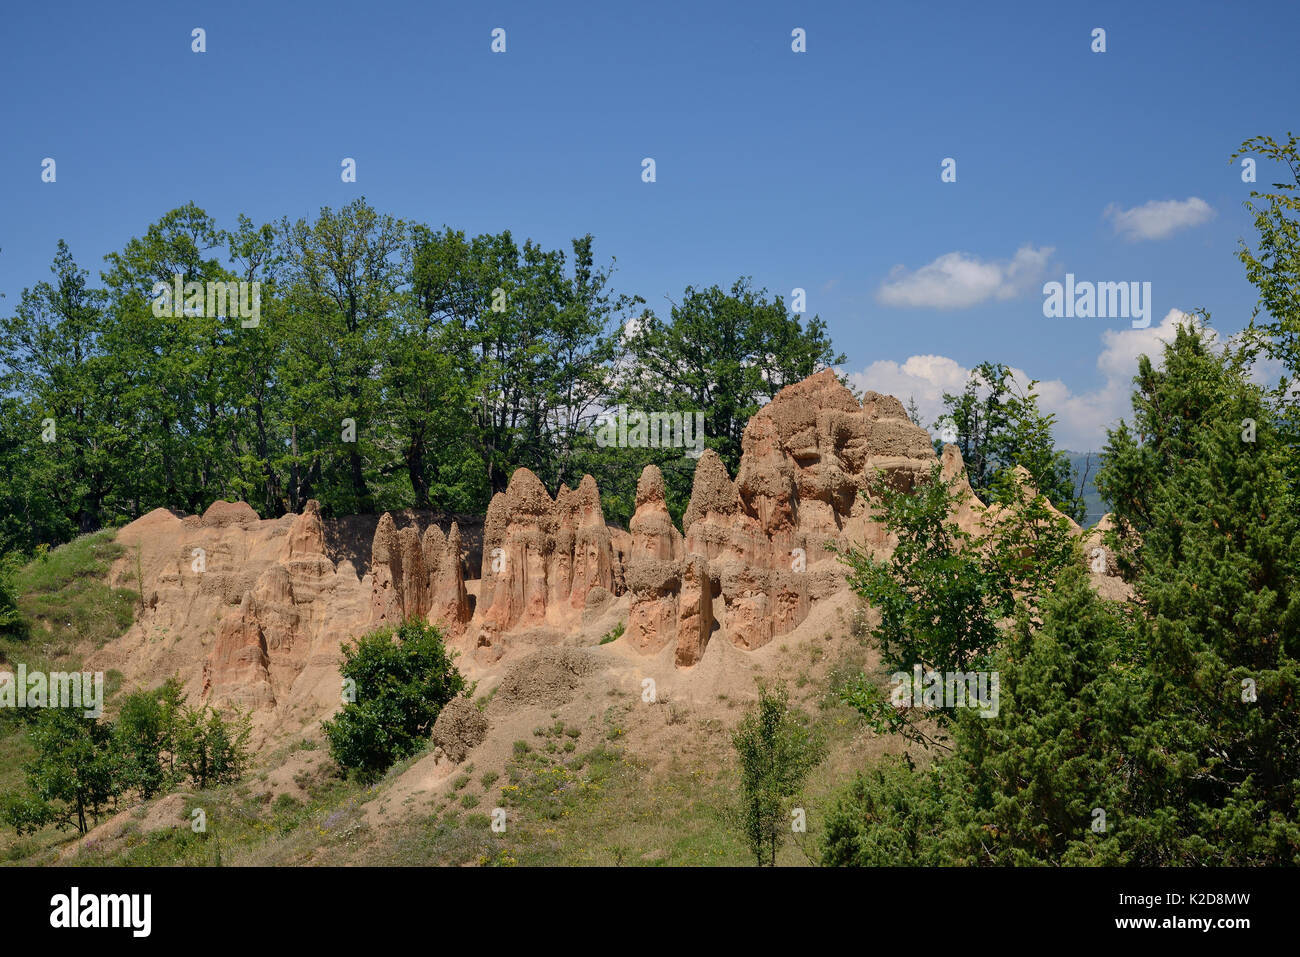 Heavily eroded towers of weathered soft sandstone / conglomerate on a mountain ridge, Miljevina, near Foca, Bosnia and Herzegovina, July 2014. Stock Photo